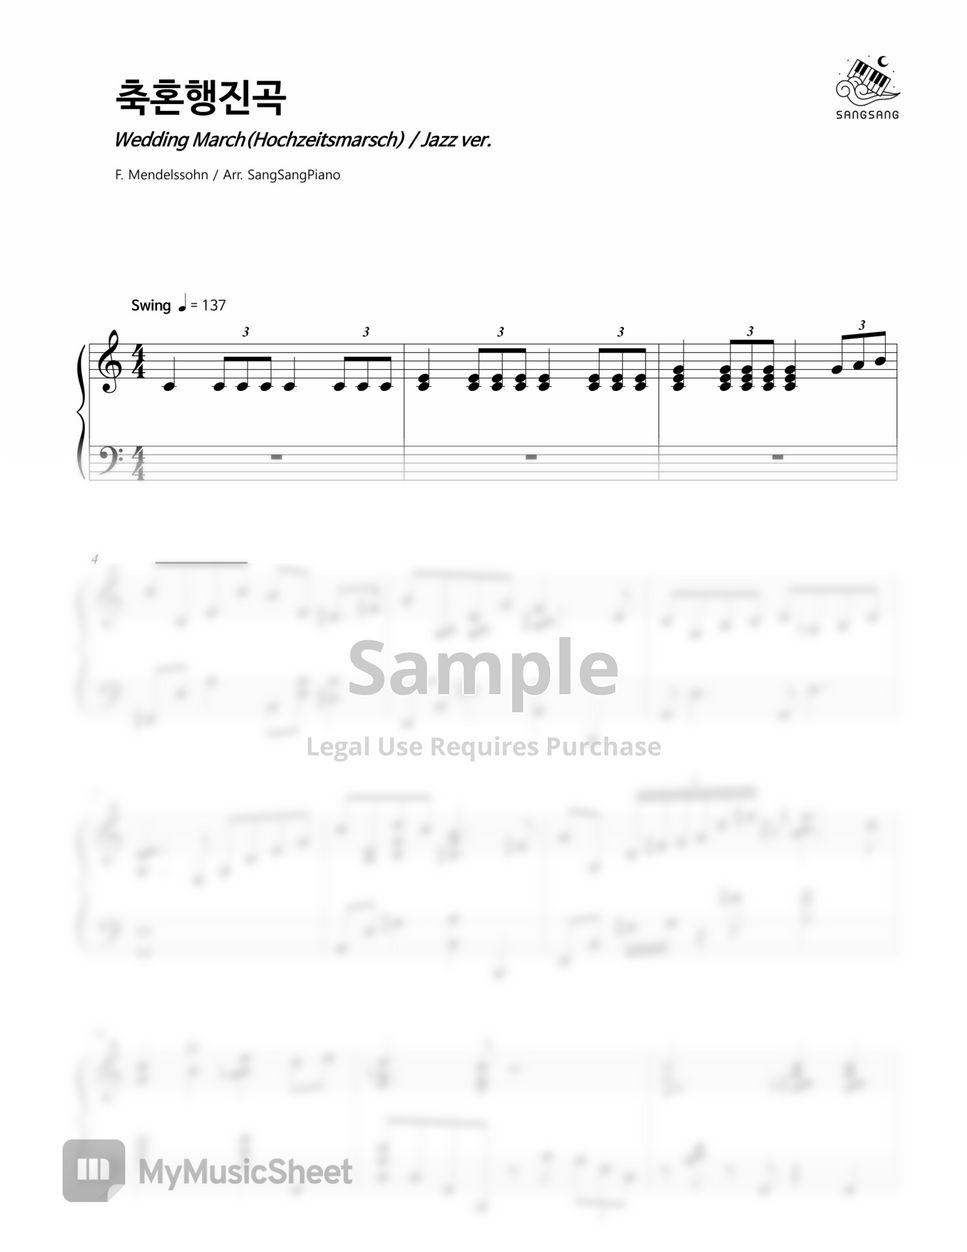 F. Mendelssohn - Wedding March (Jazz ver.) by SangSangPiano